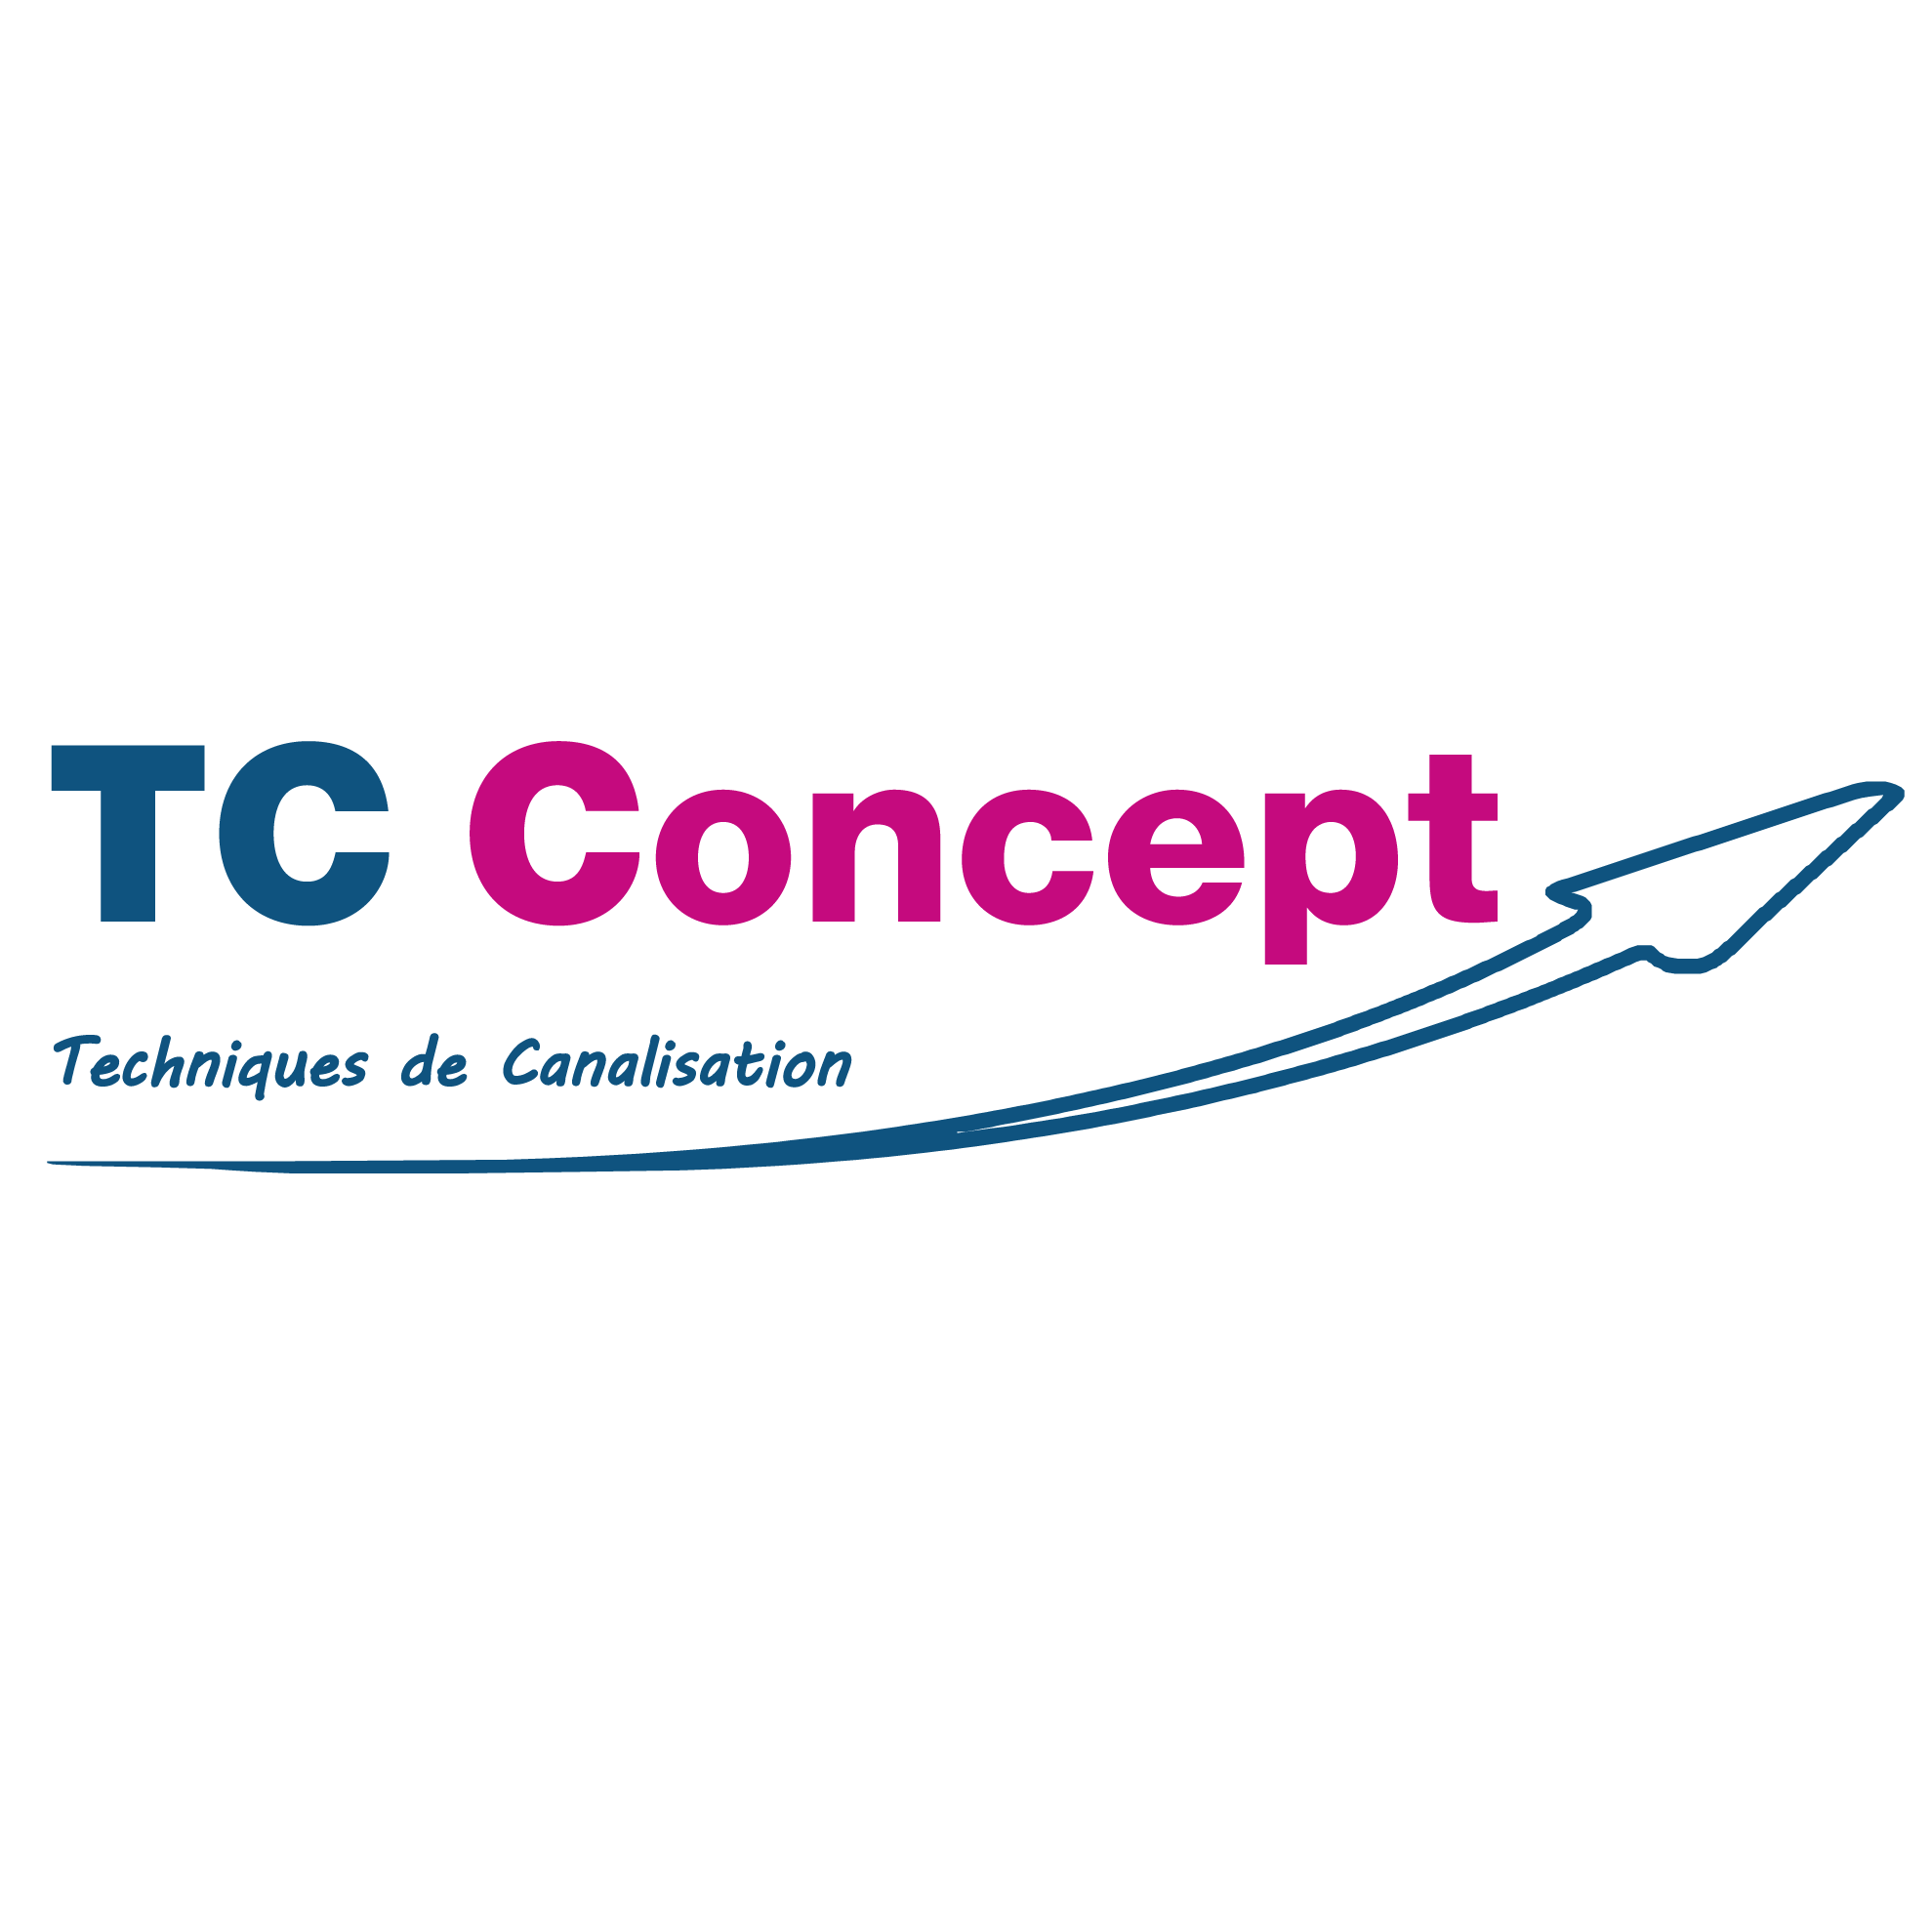 TC CONCEPT